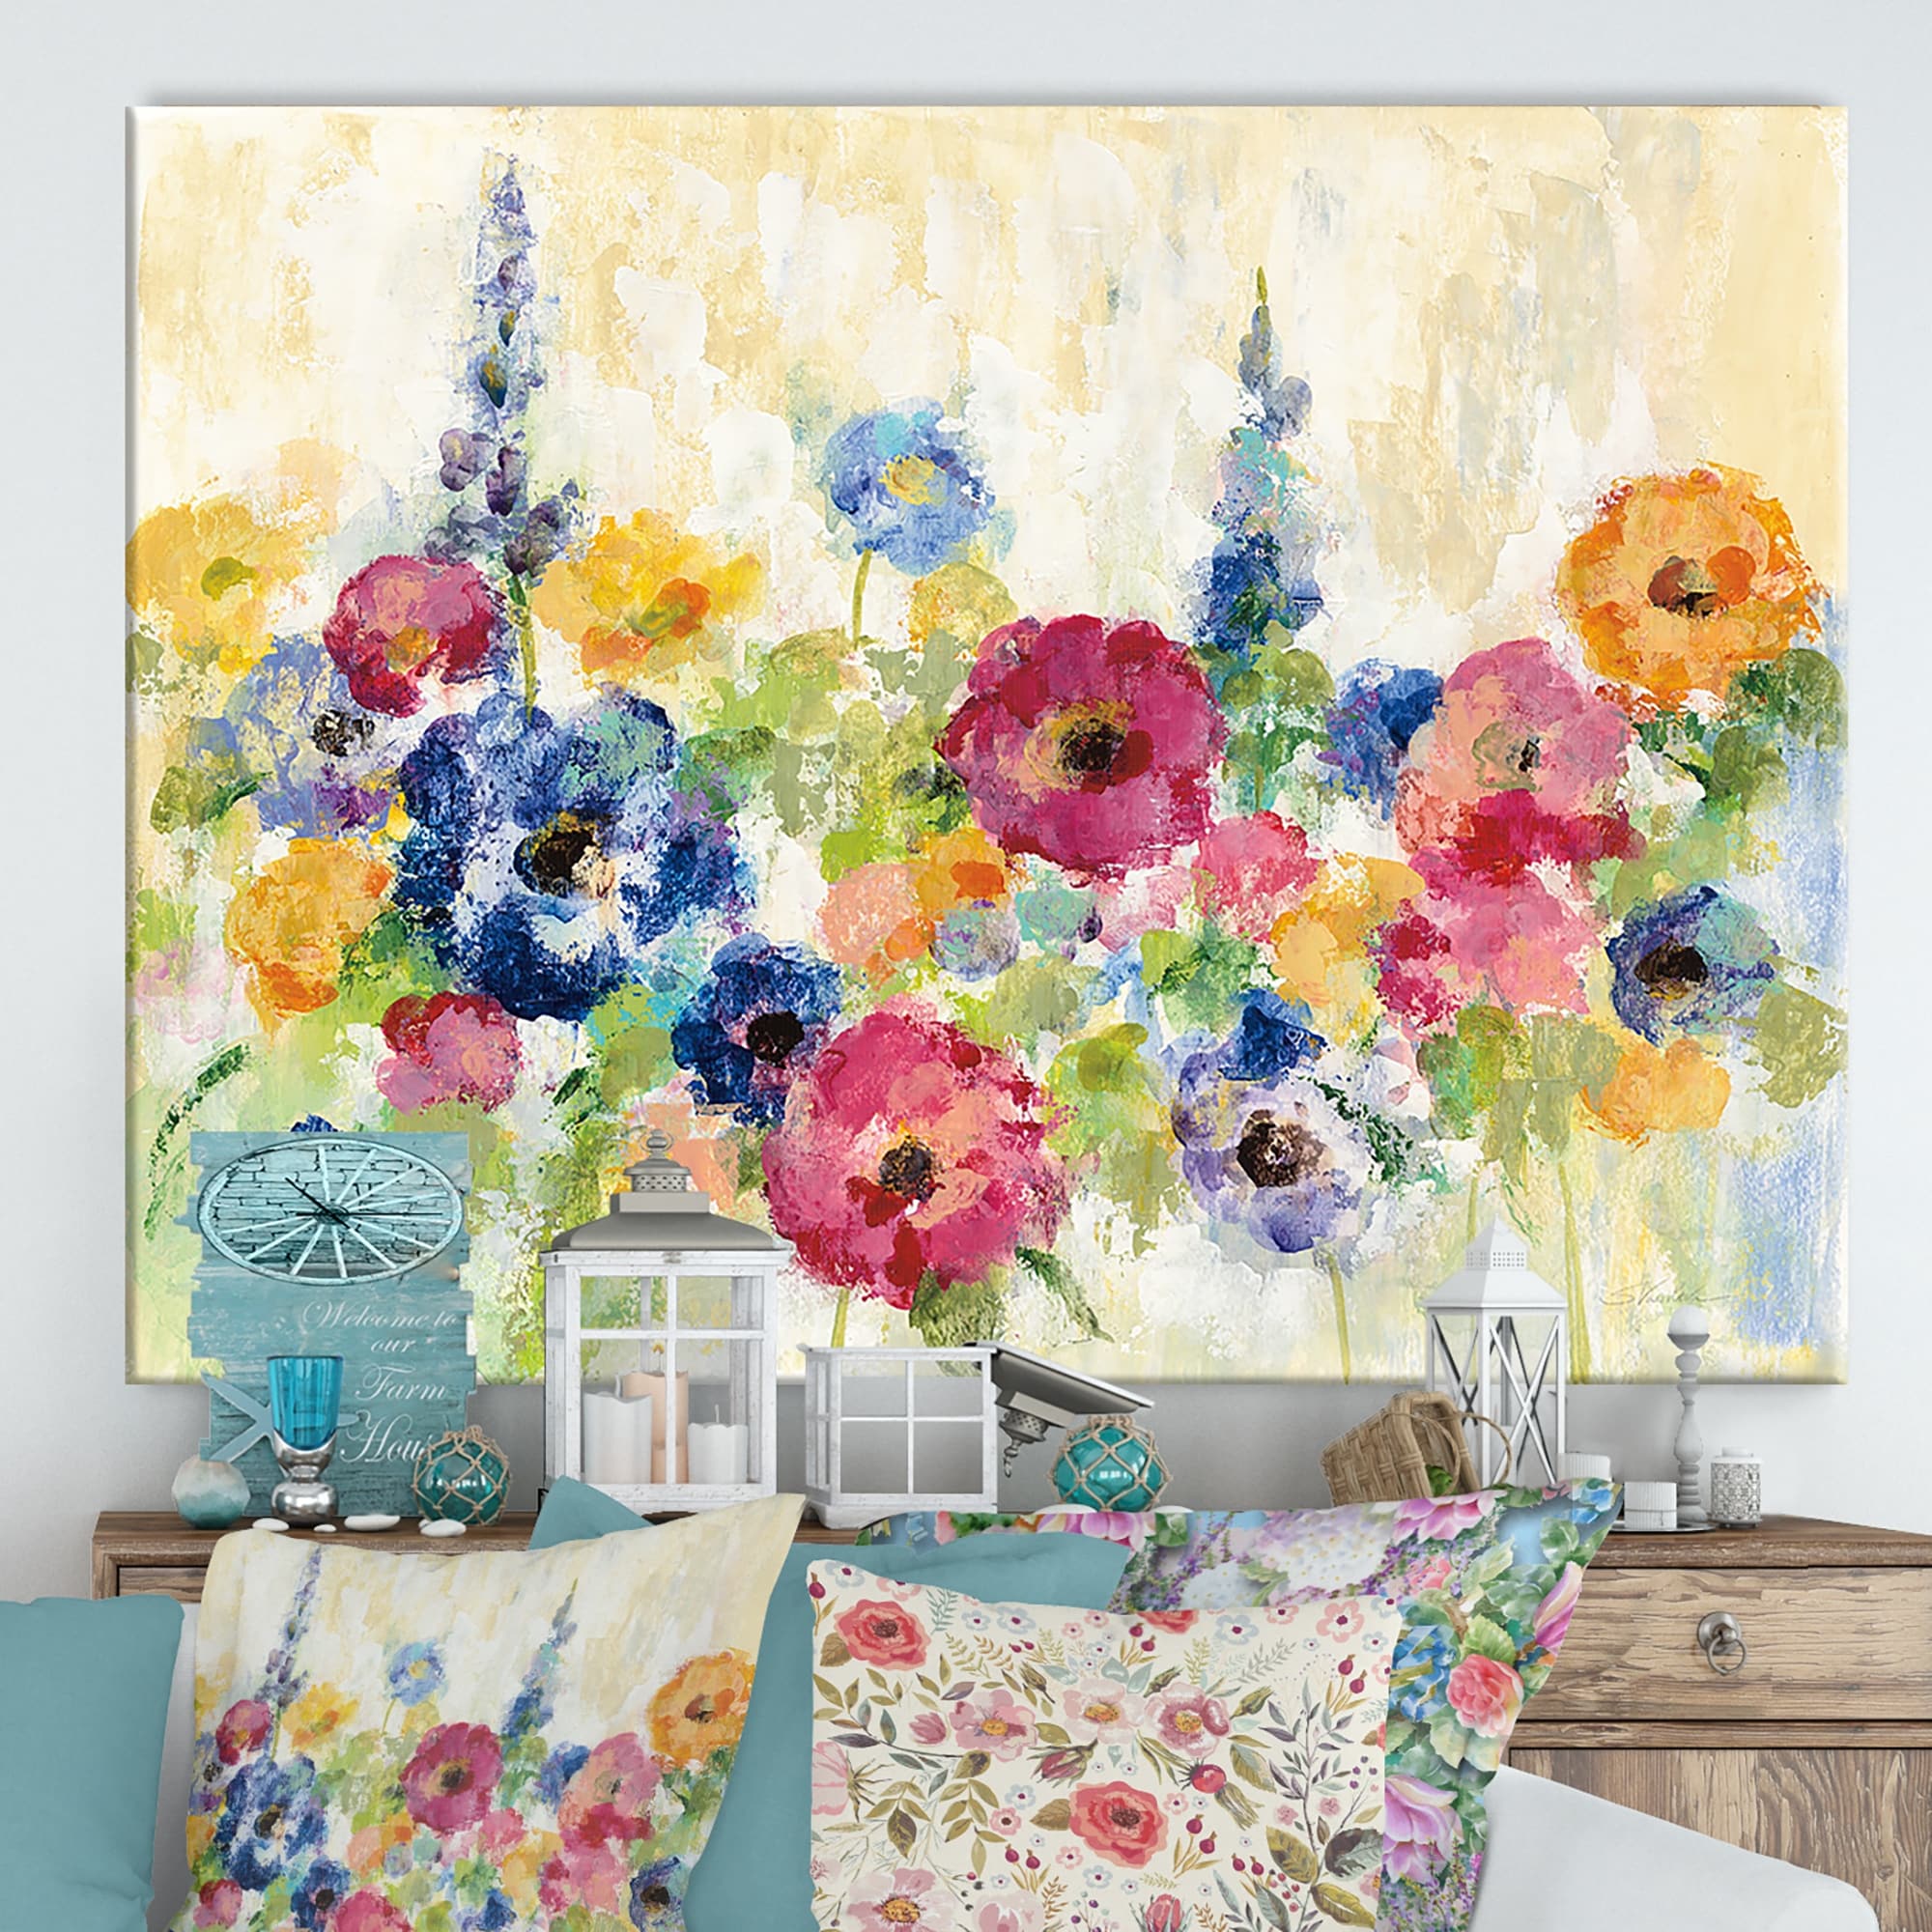 Details about   3D Sunny Flower Field 2 Framed Poster Home Decor Print Painting Art AJ WALLPAPER 